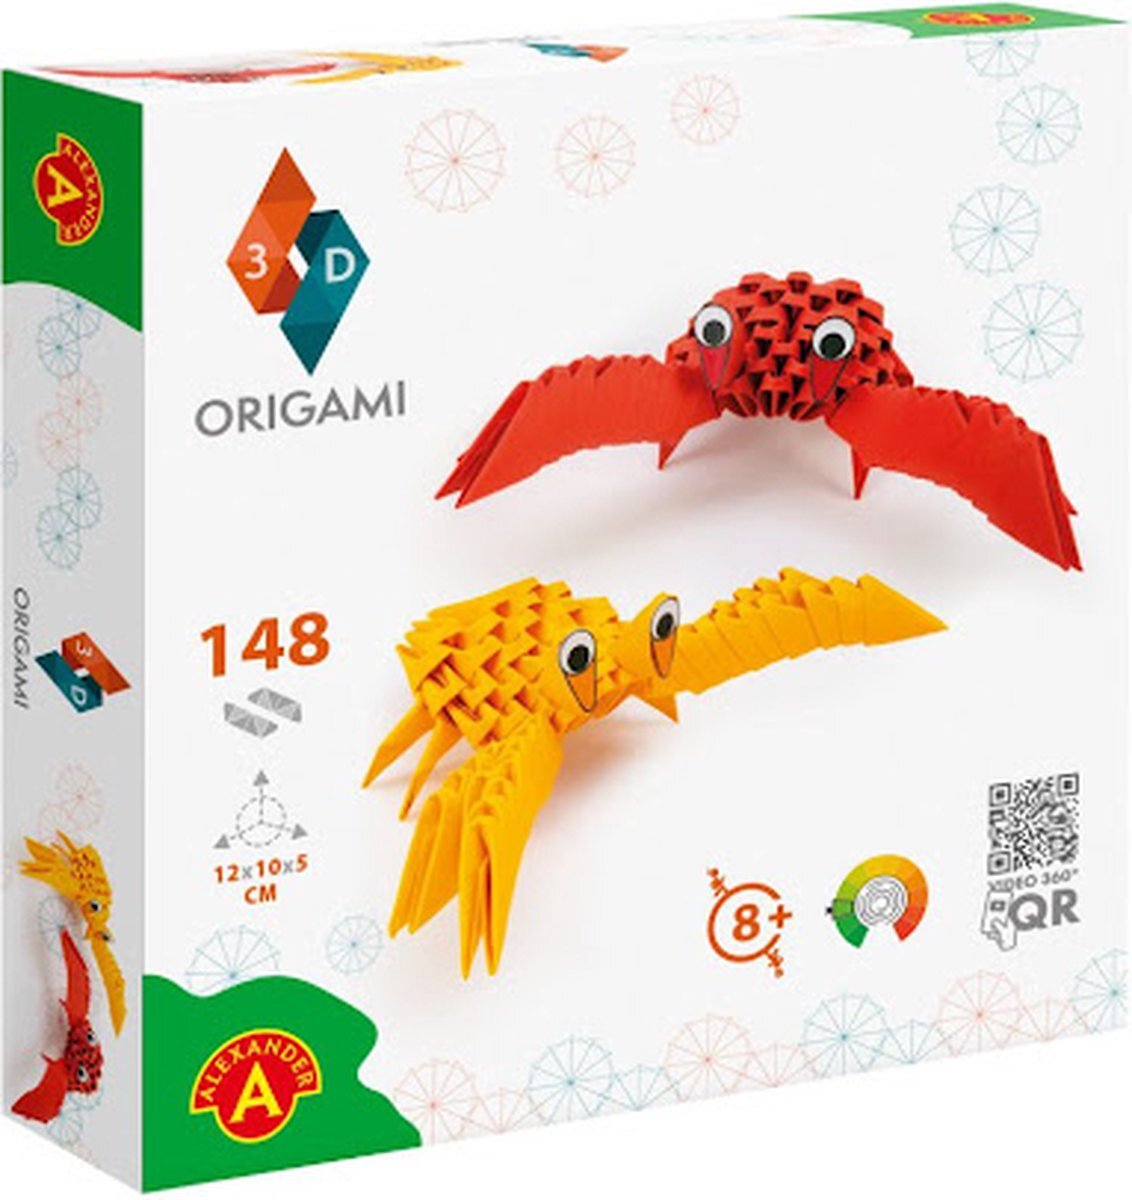 Alexander ORIGAMI 3D – Crabs -